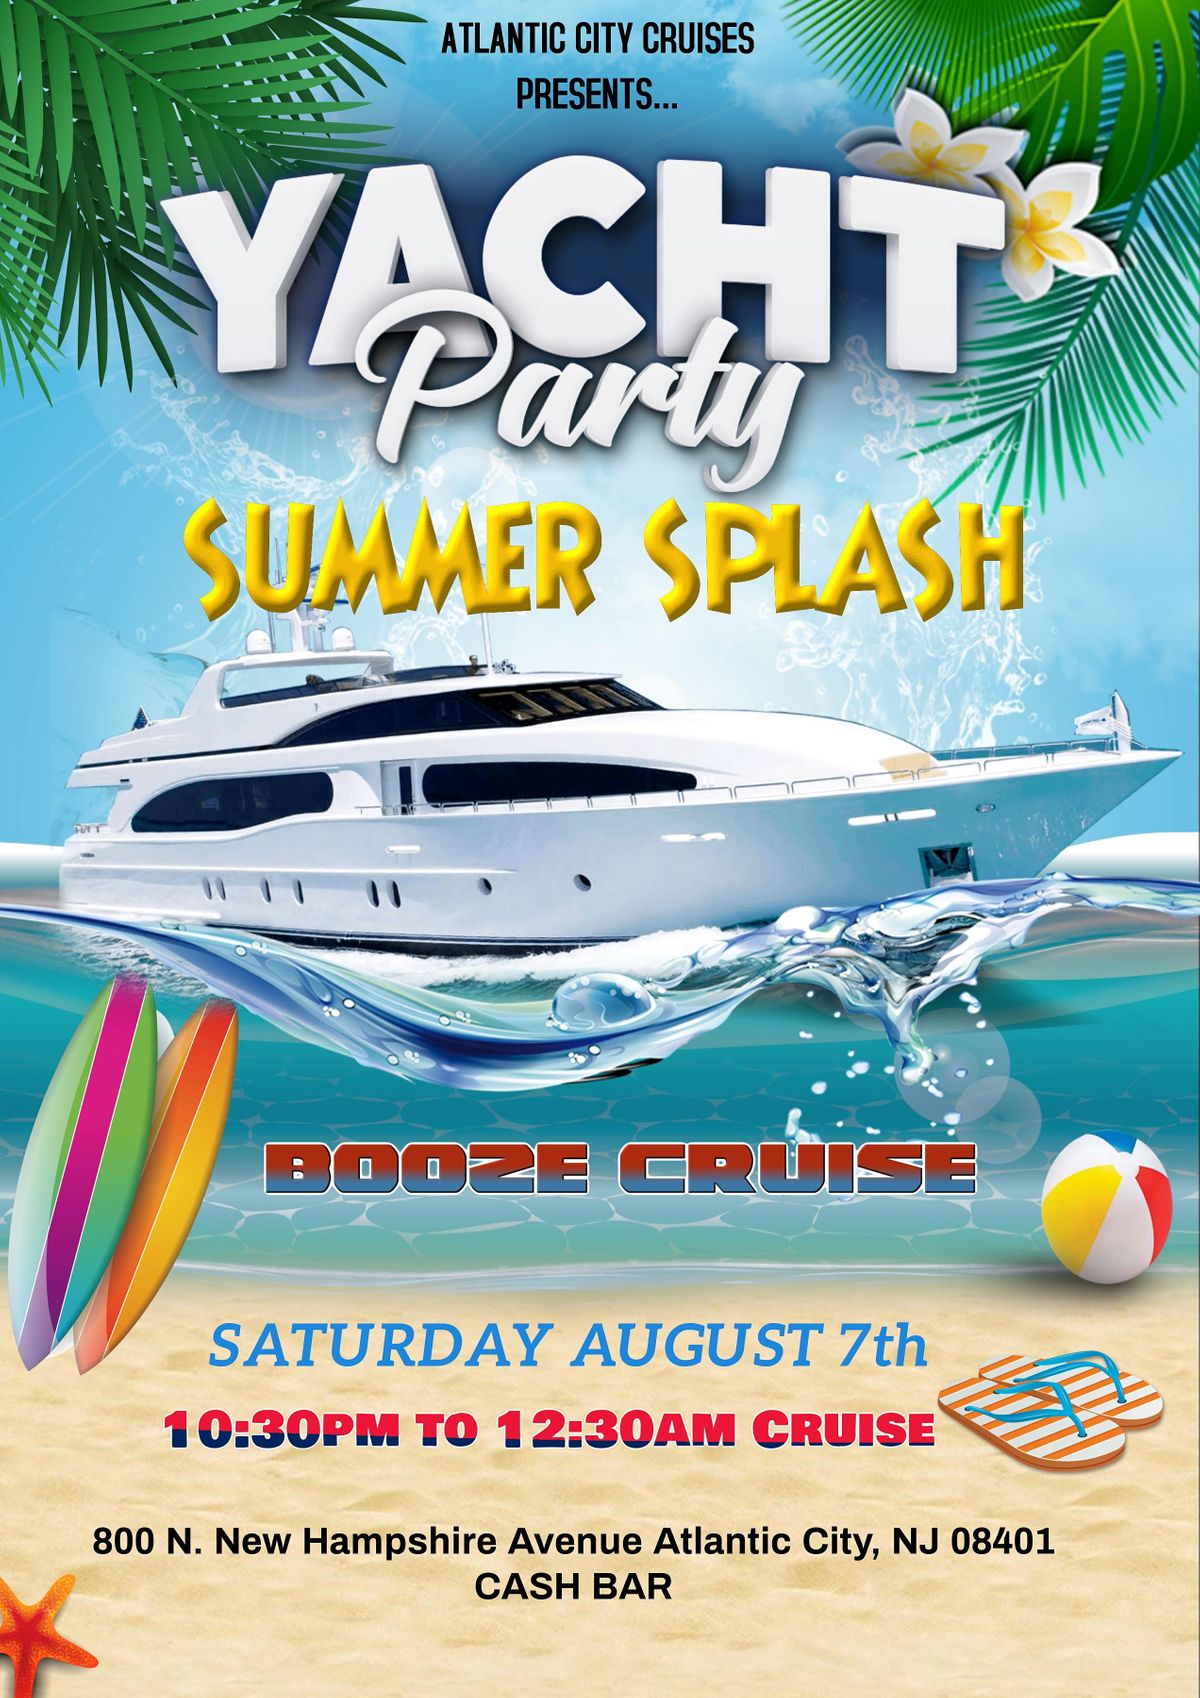 Summer Splash Booze Cruise Boat Party in Atlantic City